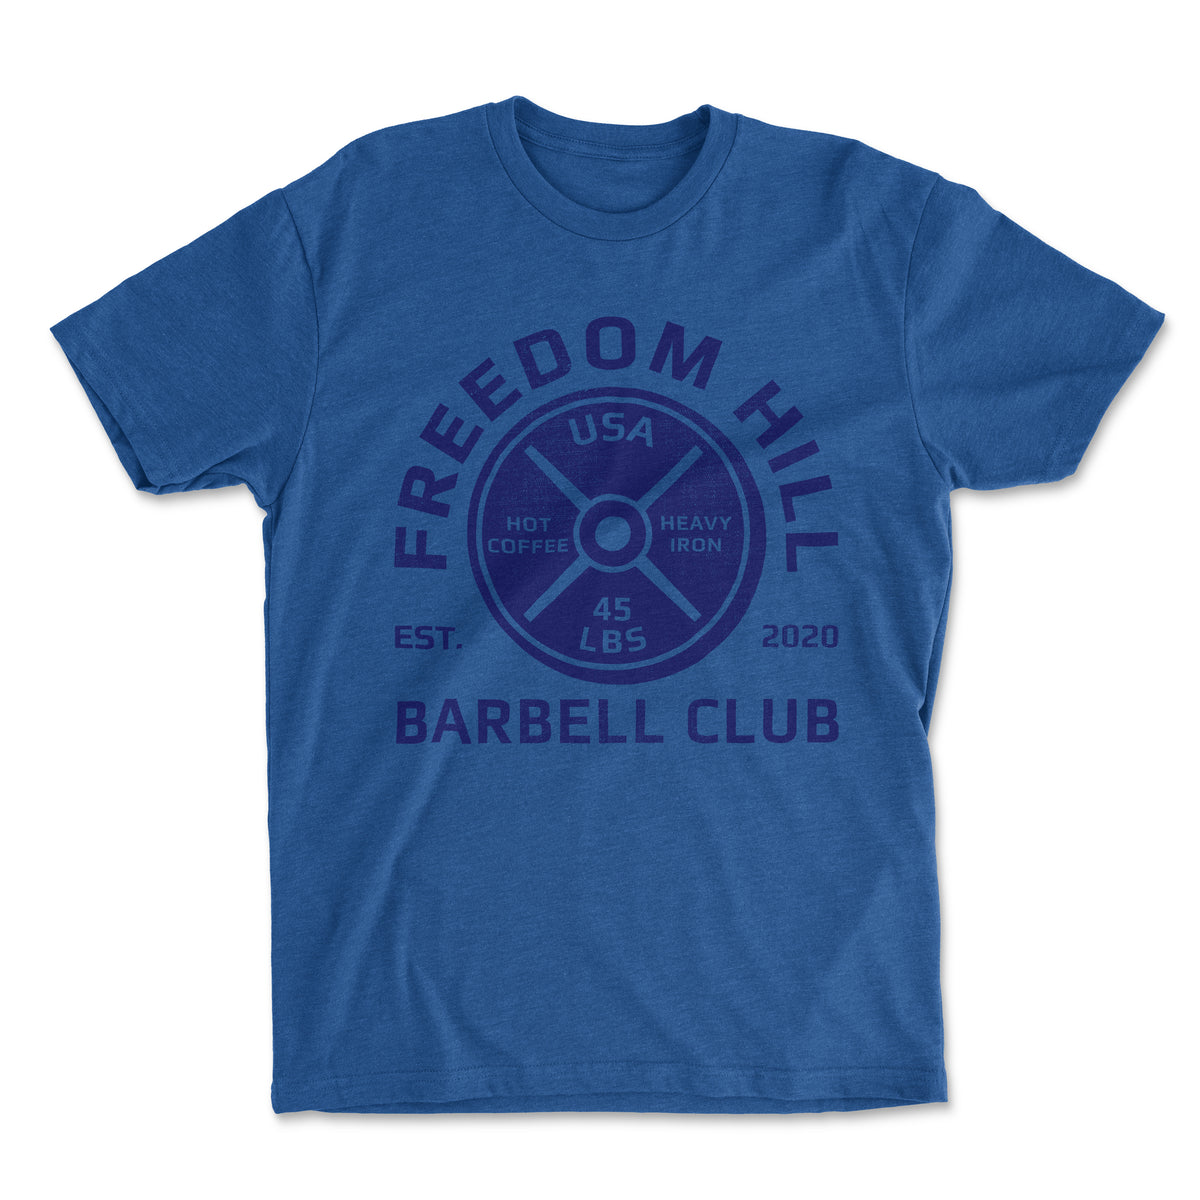 FREEDOM HILL BARBELL CLUB TEE